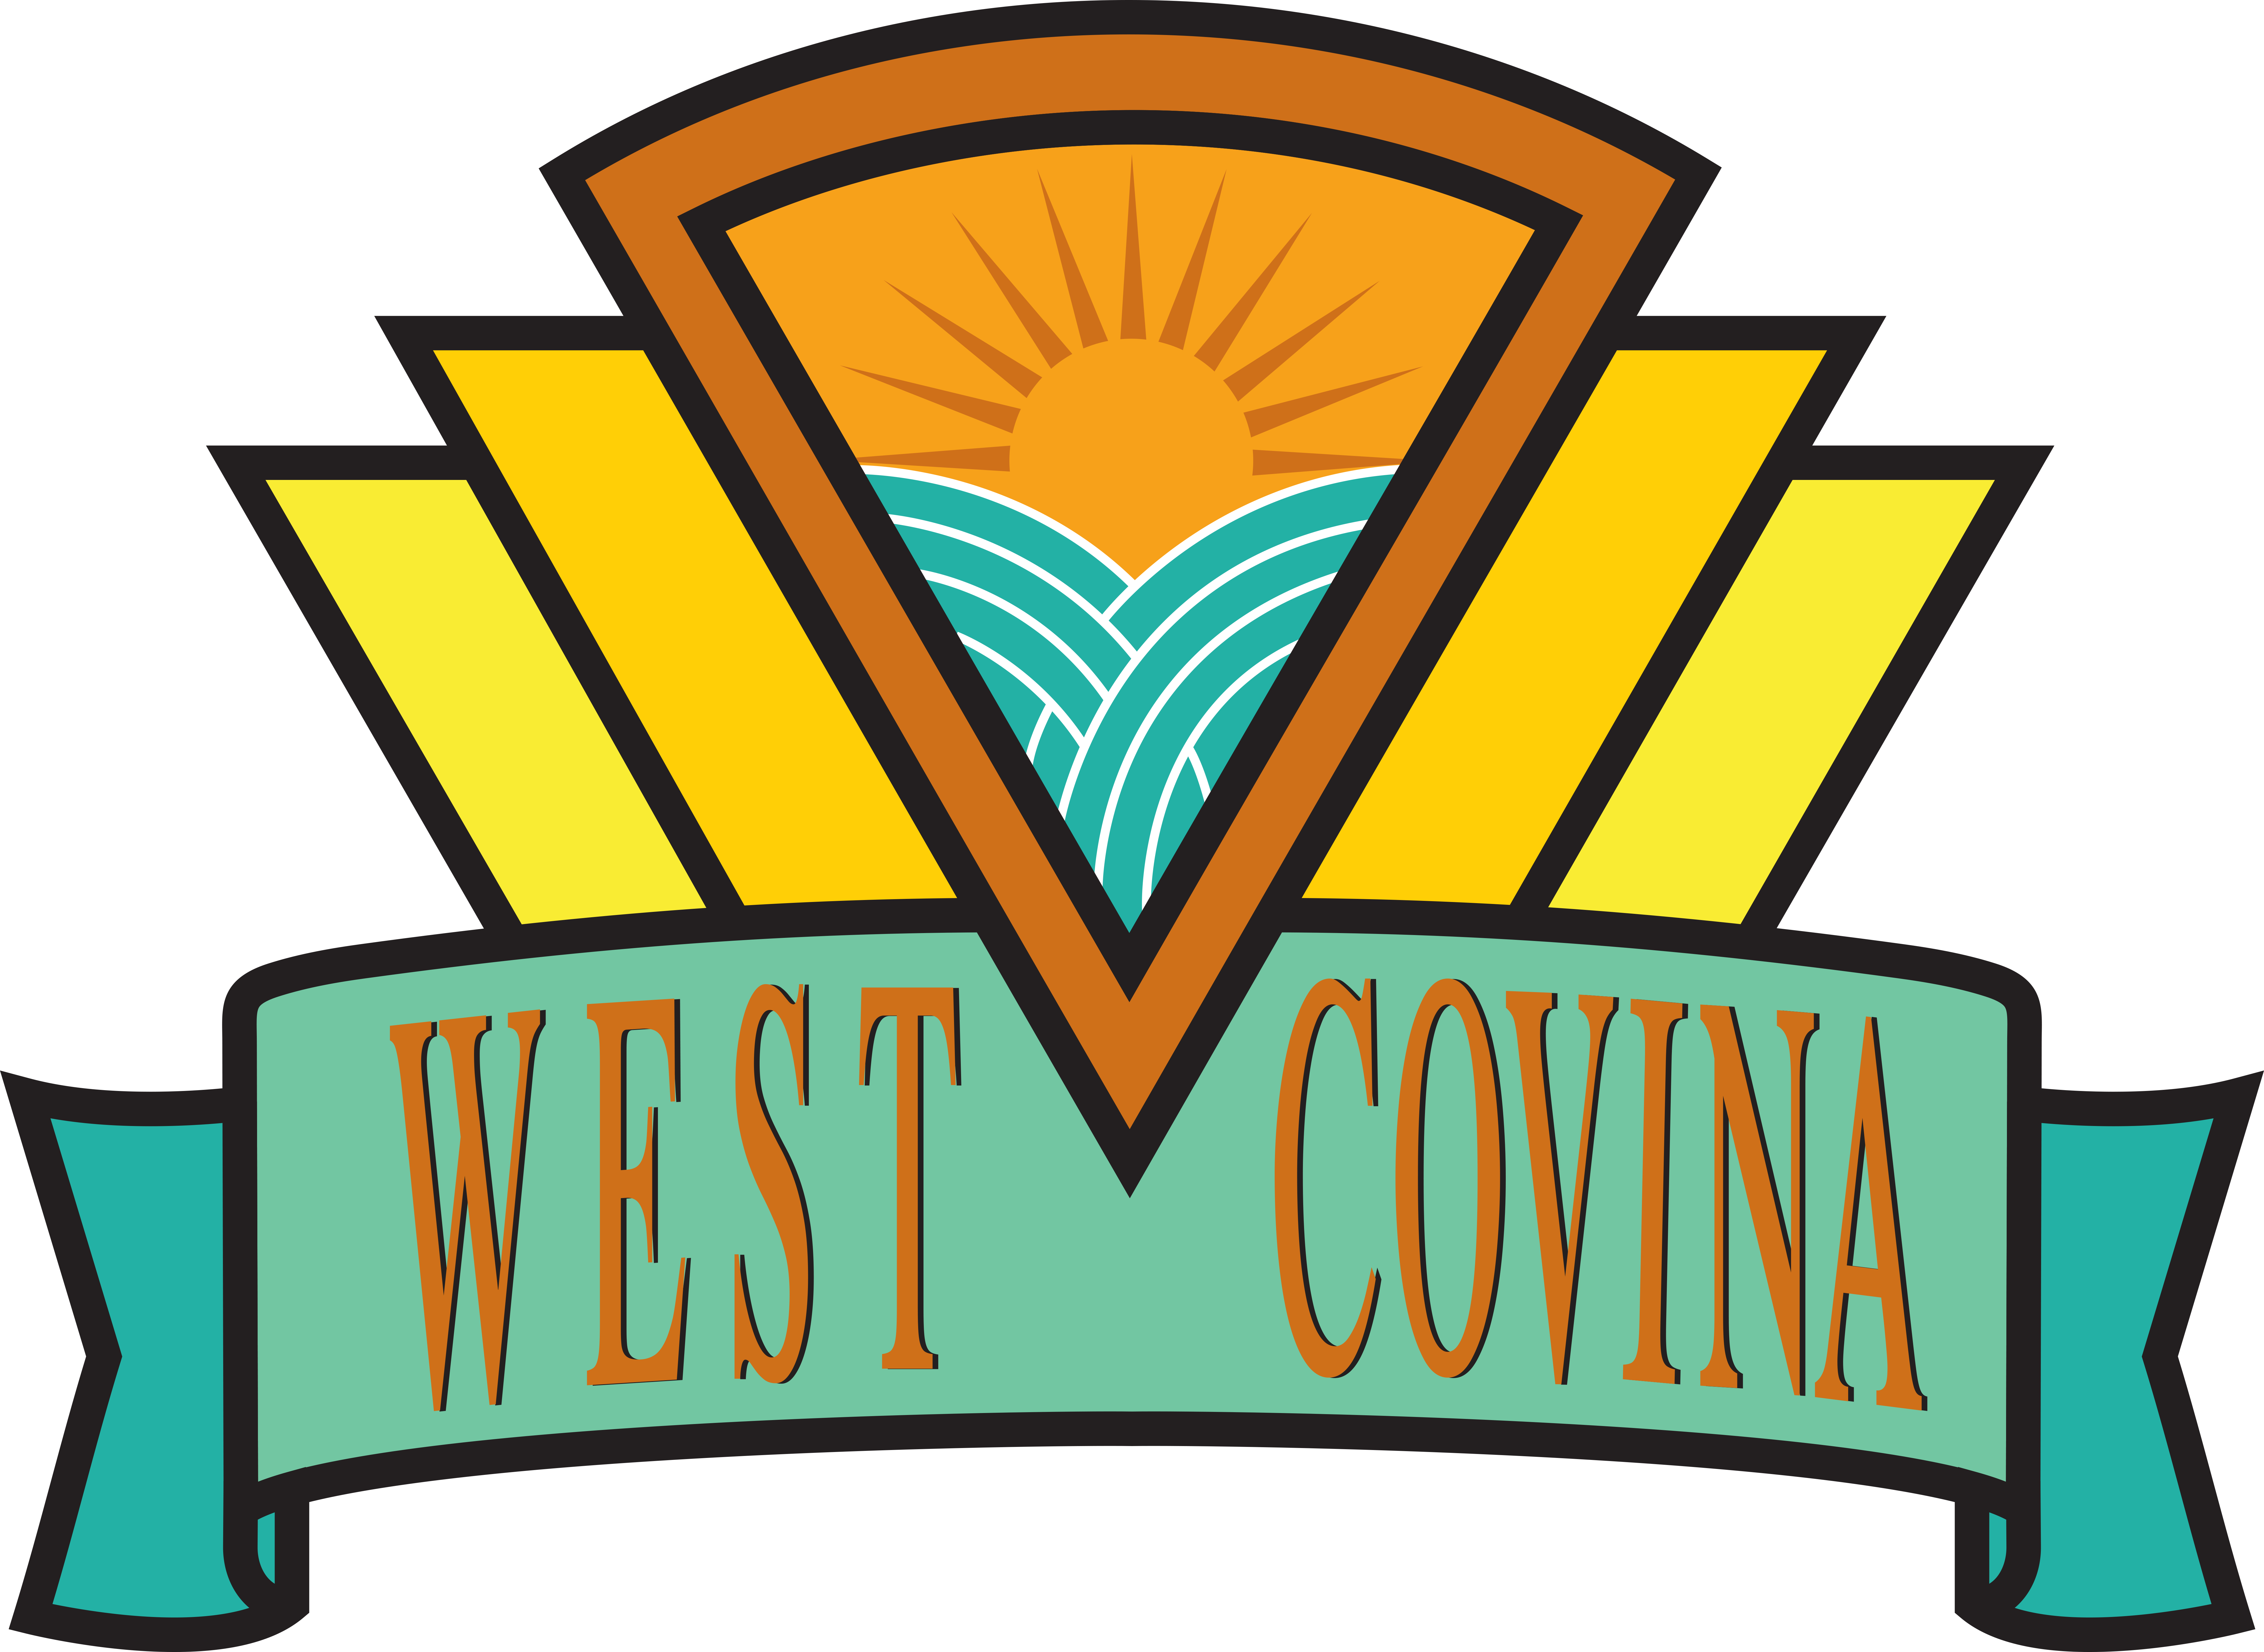 My West Covina